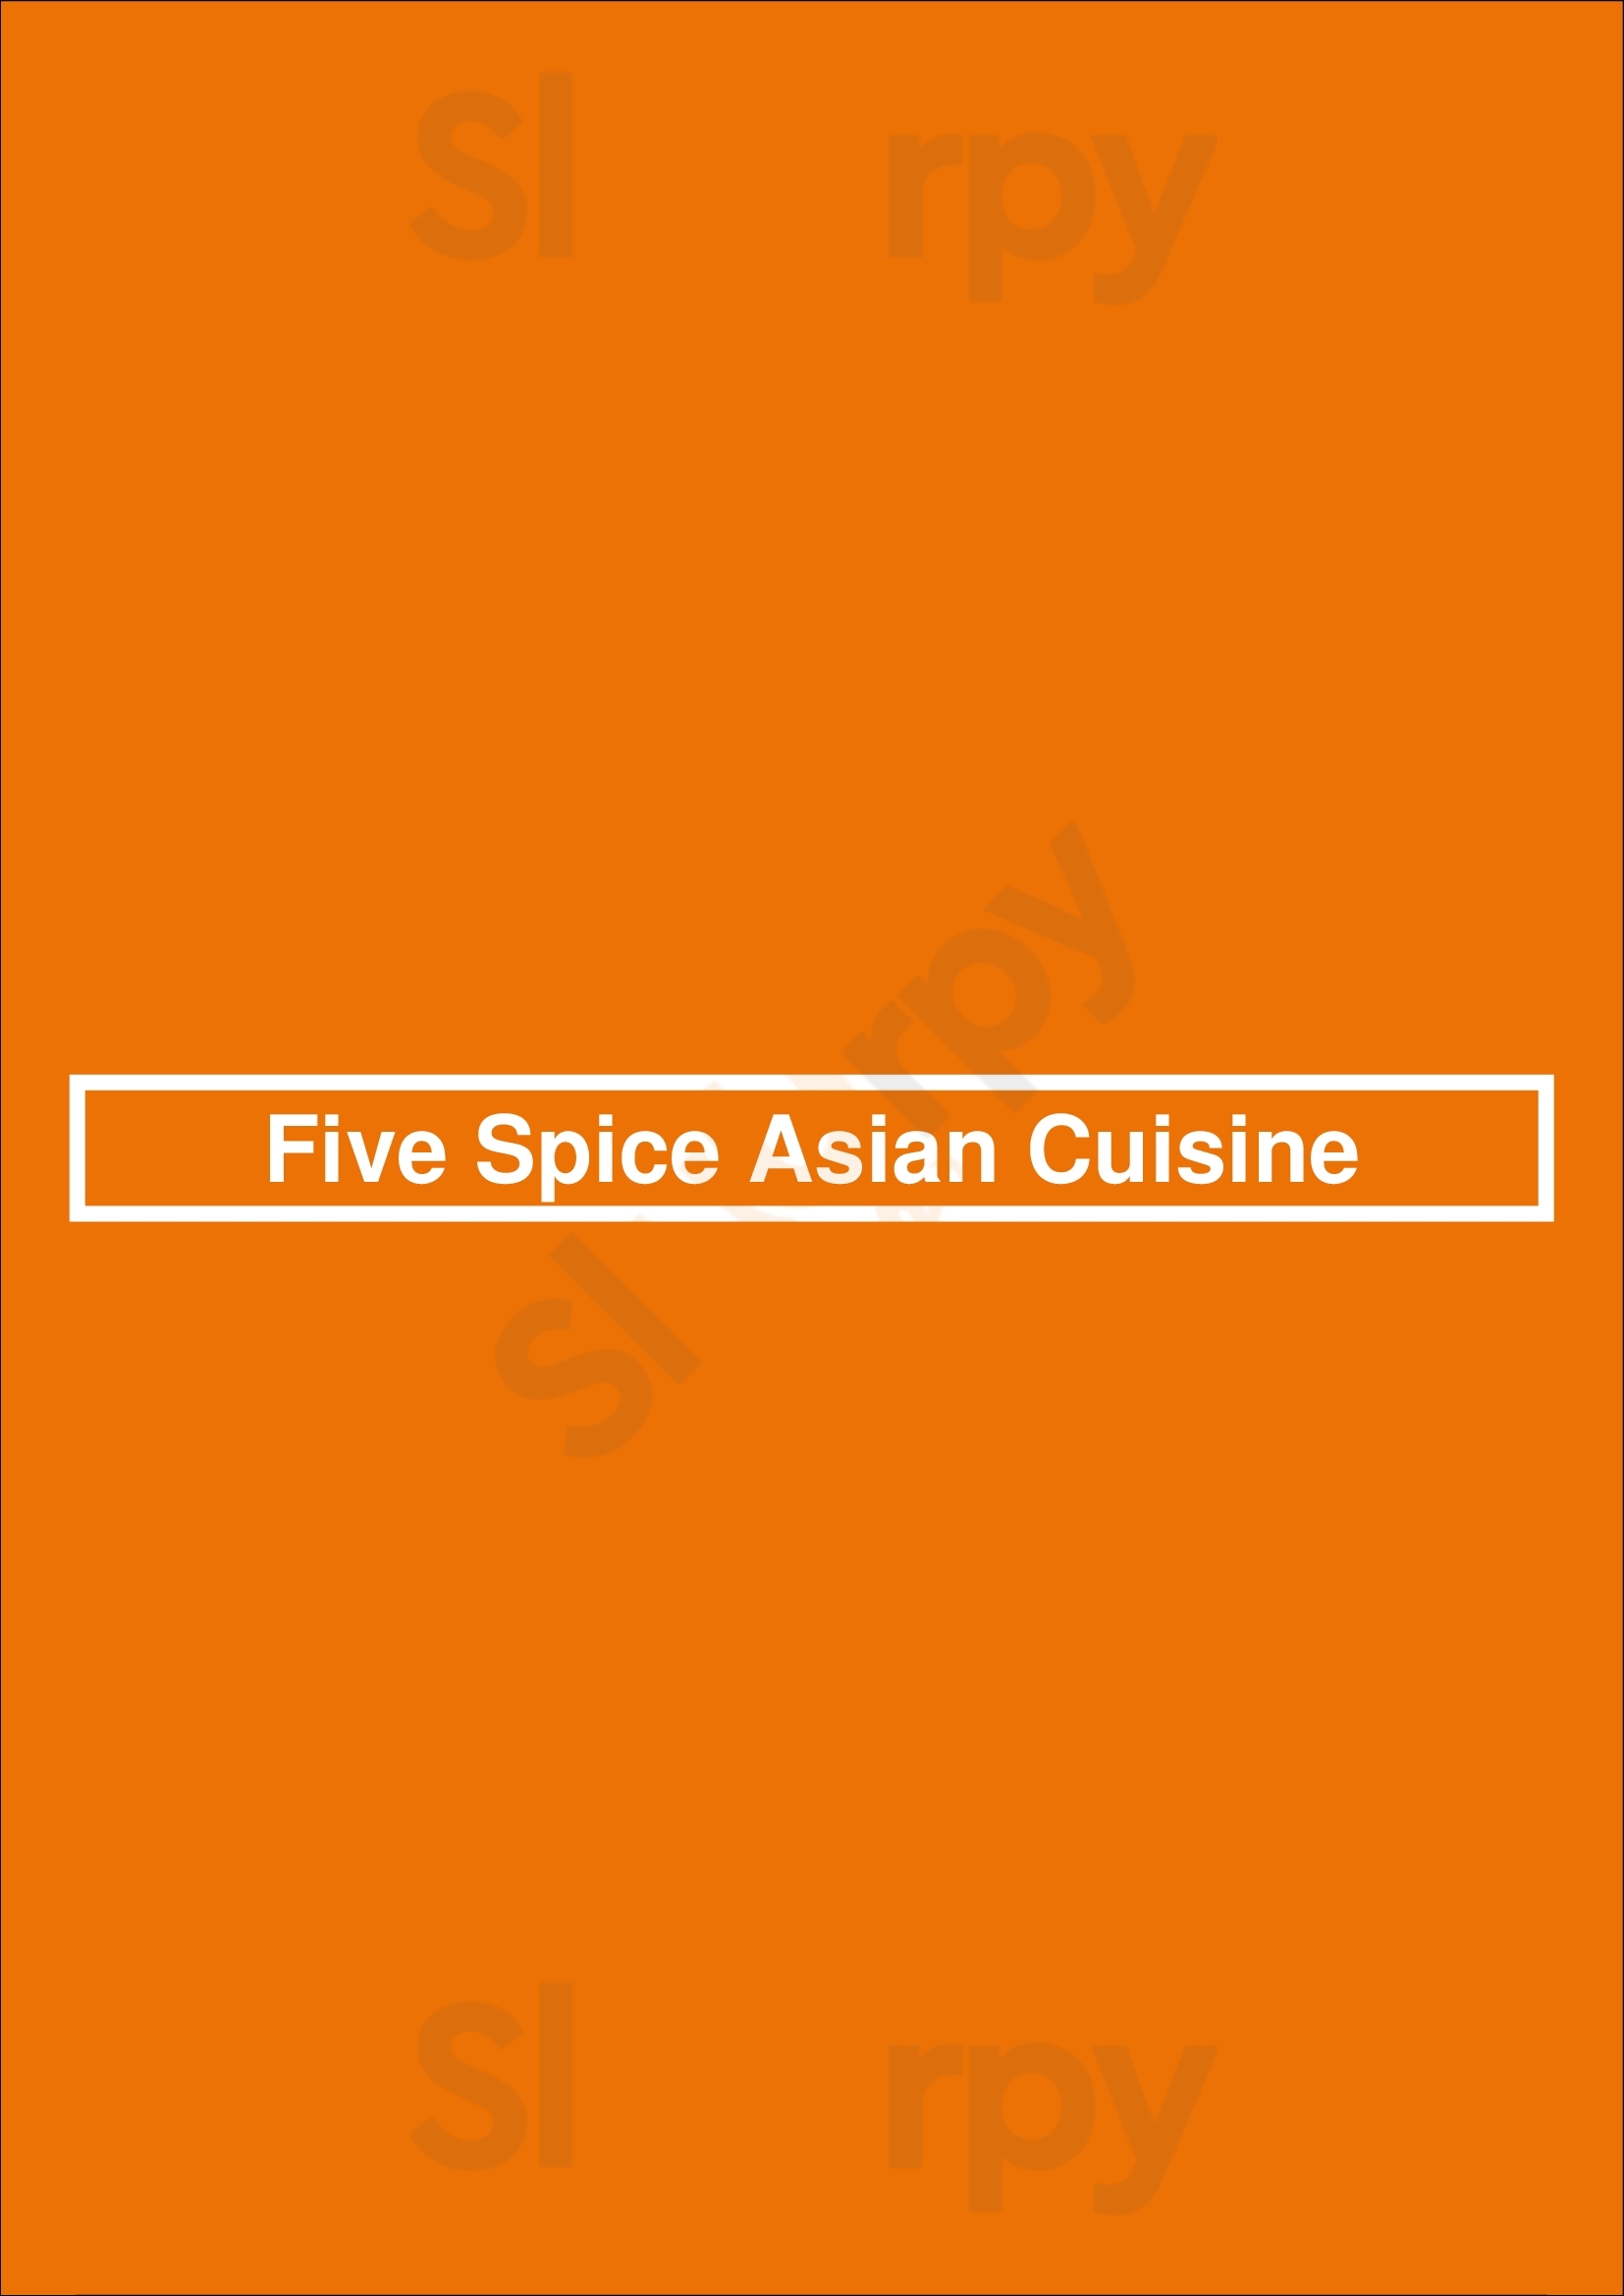 Five Spice Asian Cuisine Houston Menu - 1